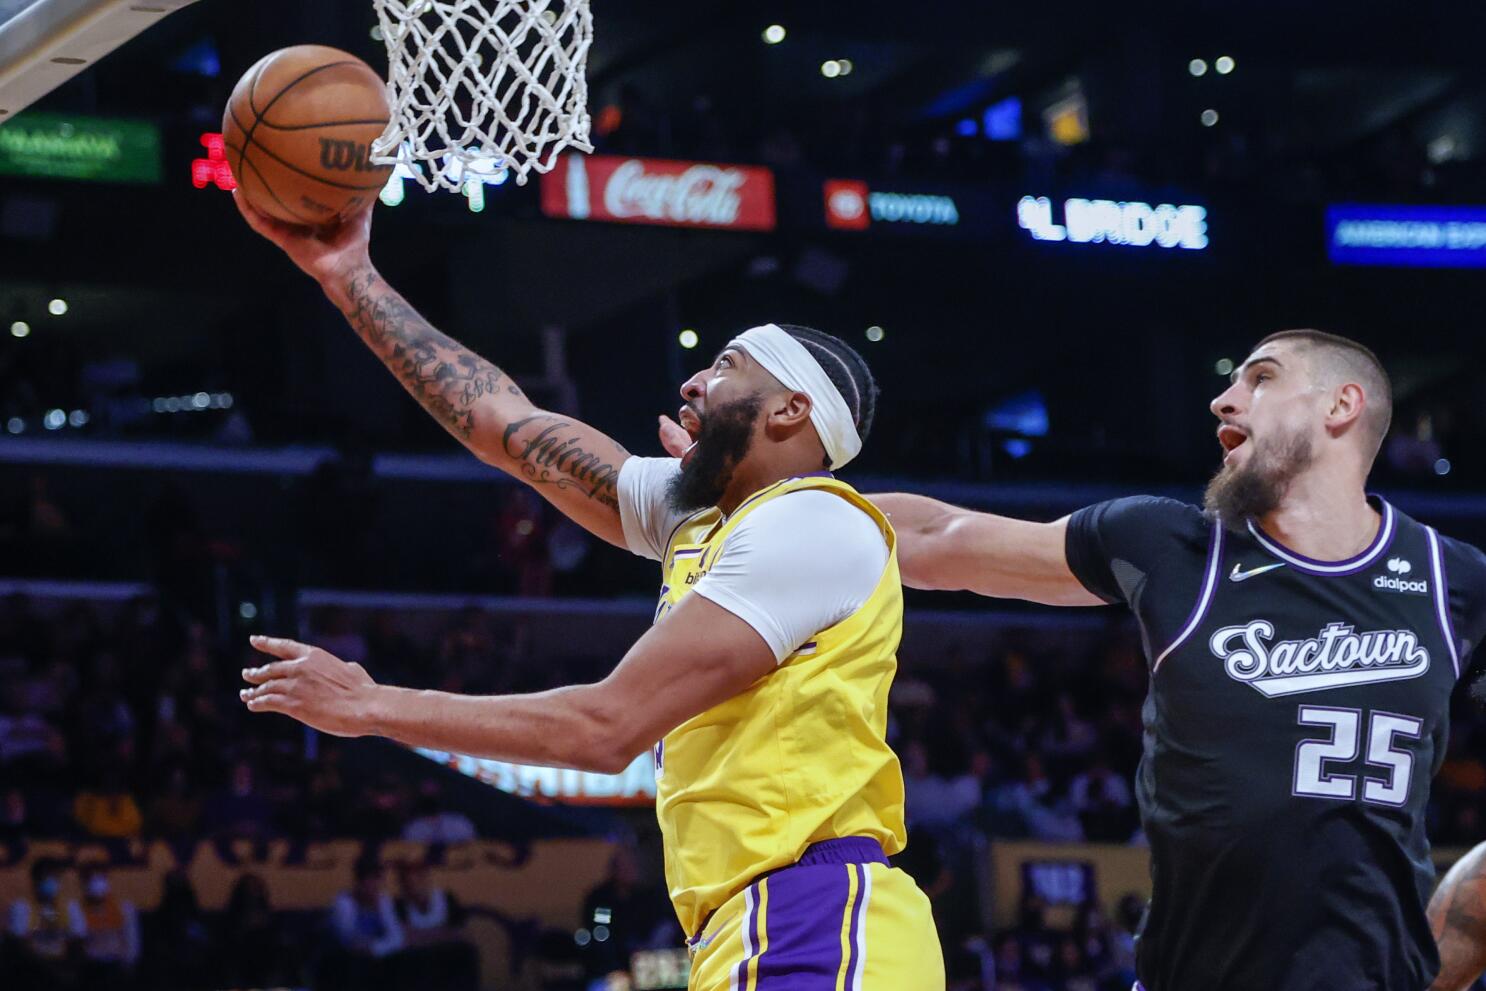 Lakers' defense gets swamped in loss to Kings